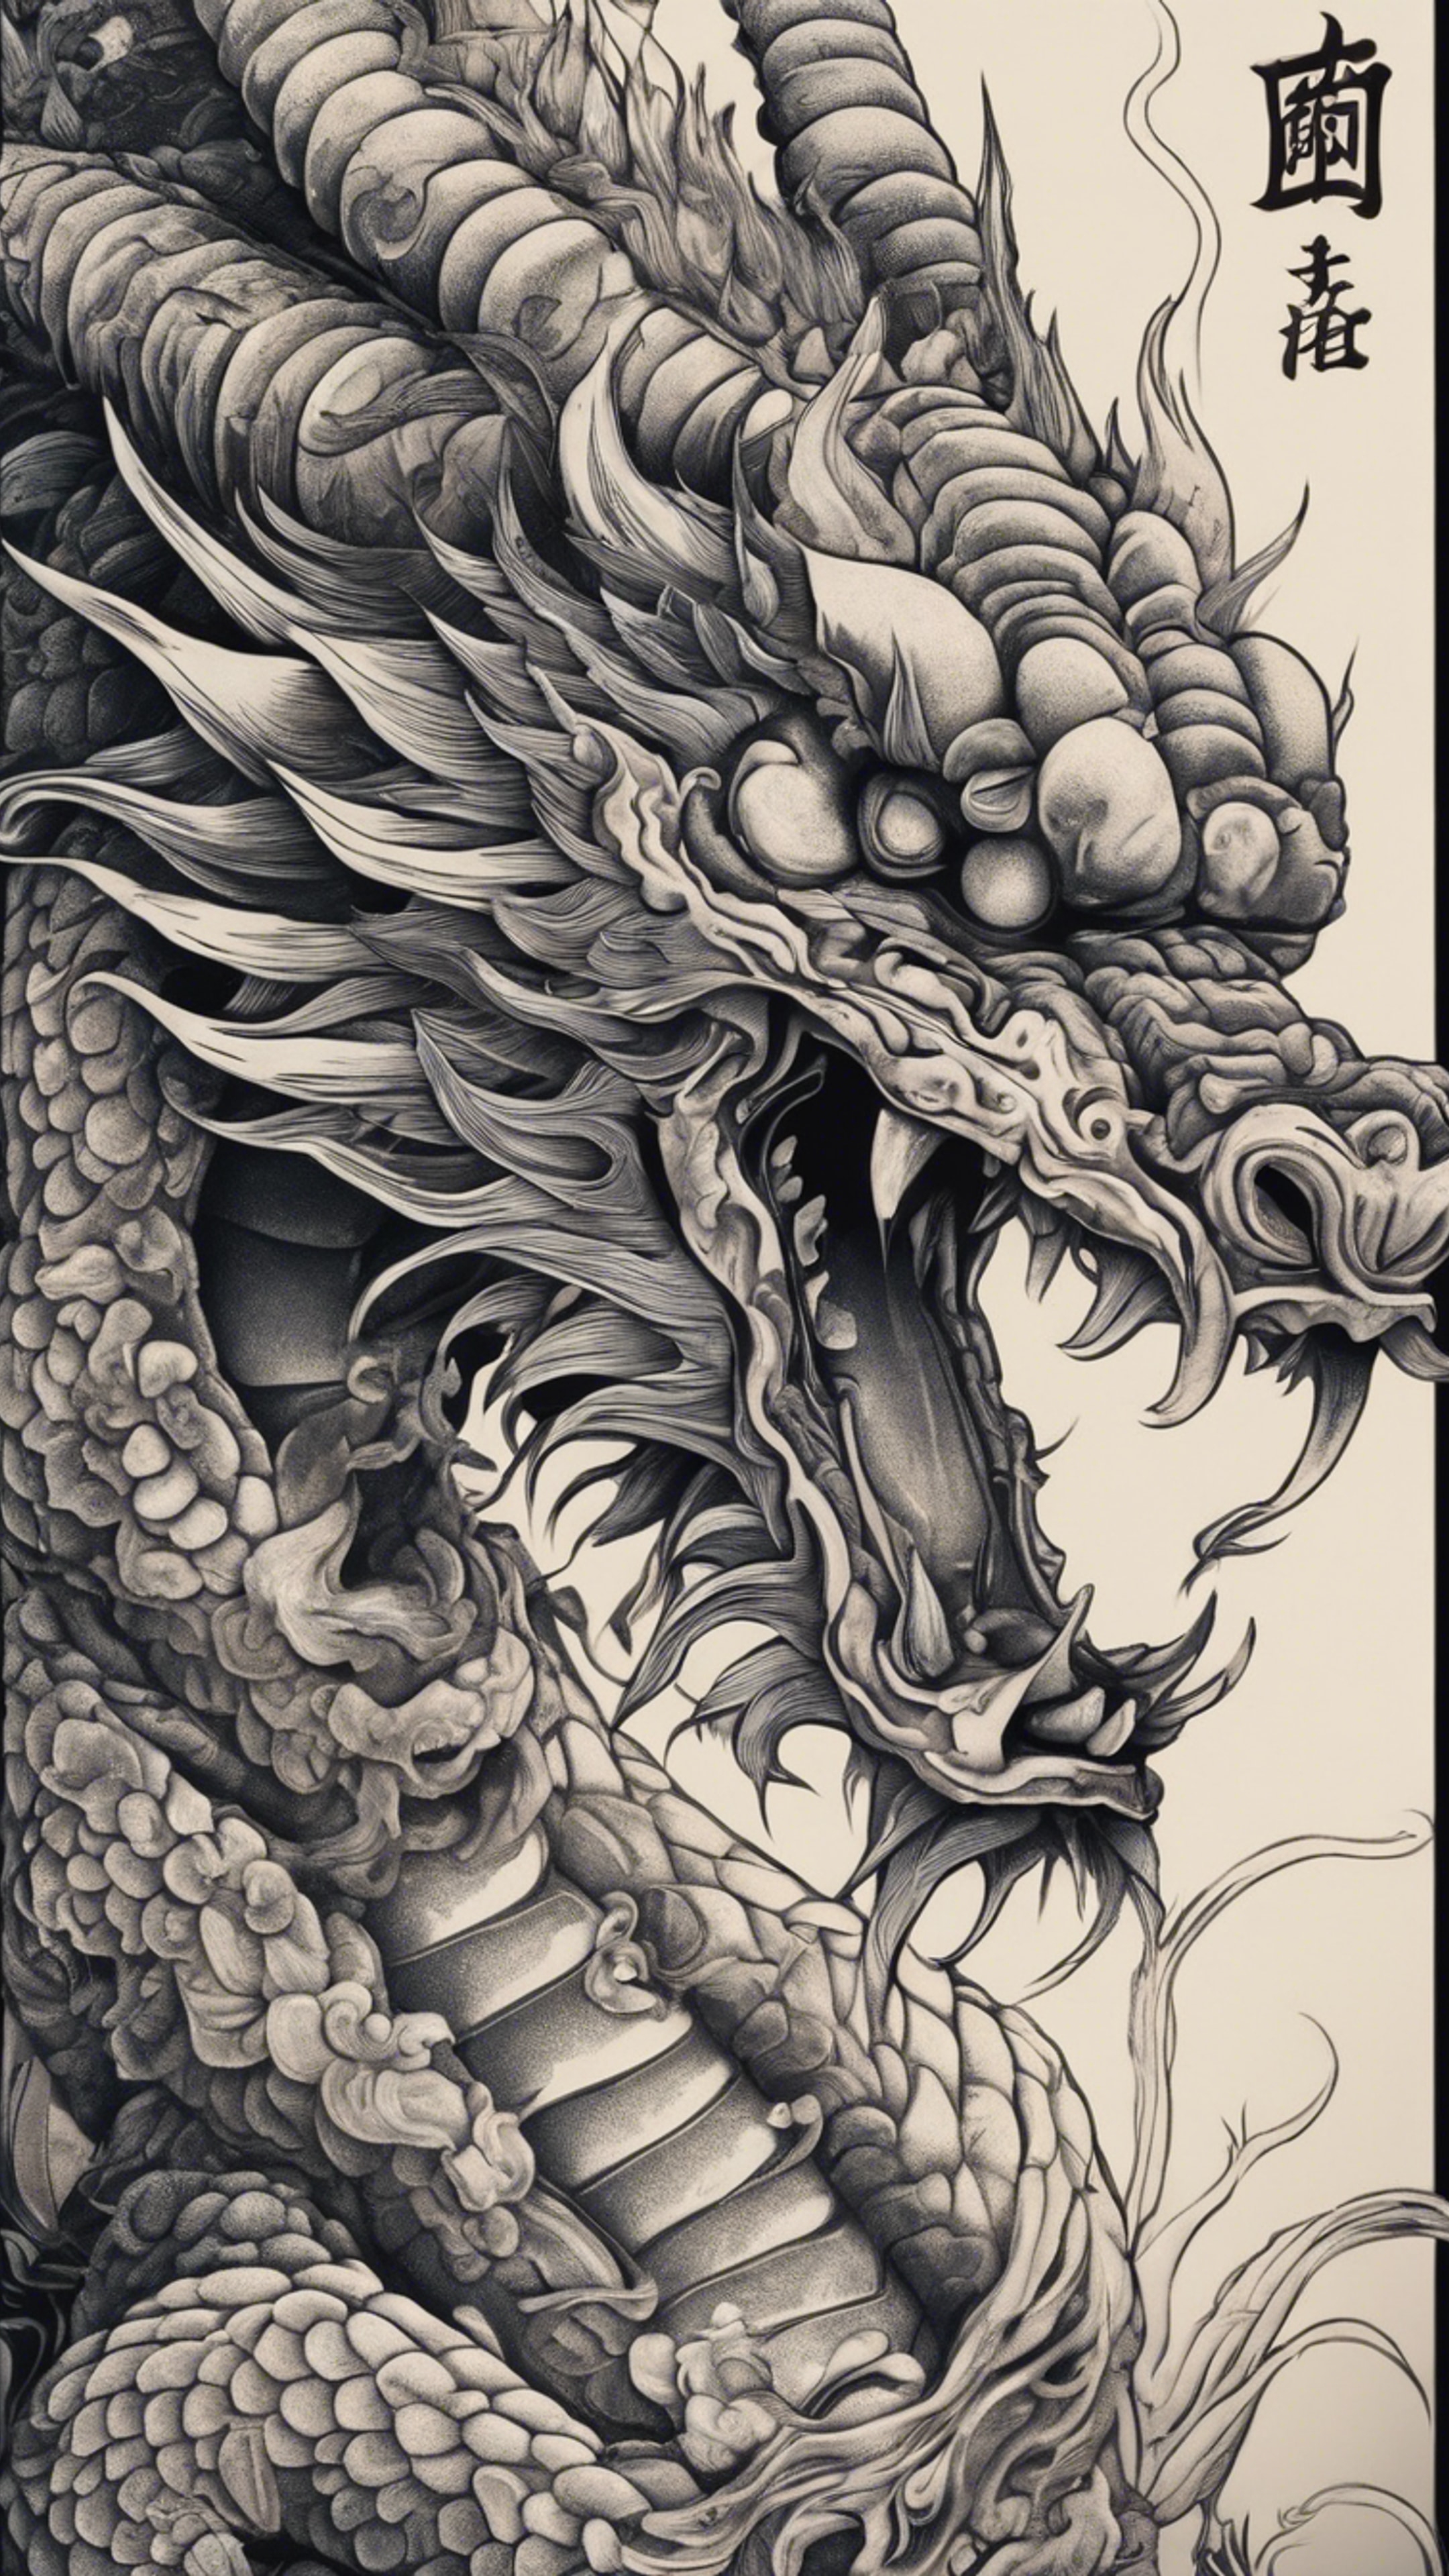 A Japanese dragon tattoo design with intricate details.壁紙[fa4ff1f2e6c24a2f94e4]